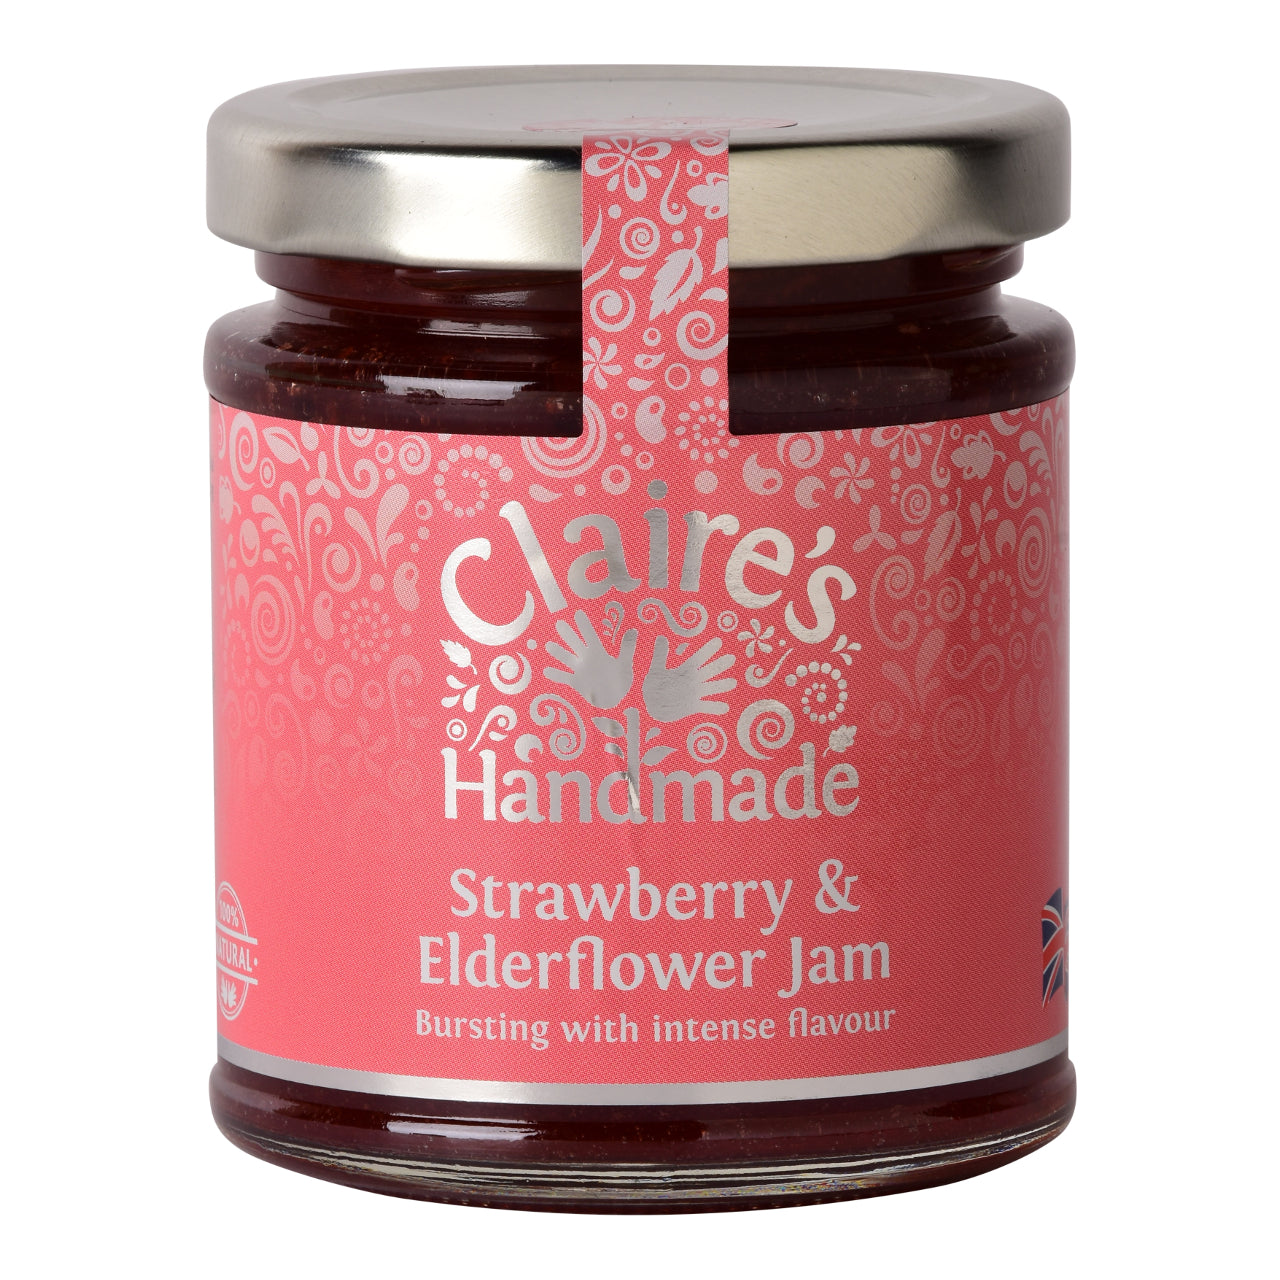 Claire's Handmade Strawberry & Elderflower Jam 227g